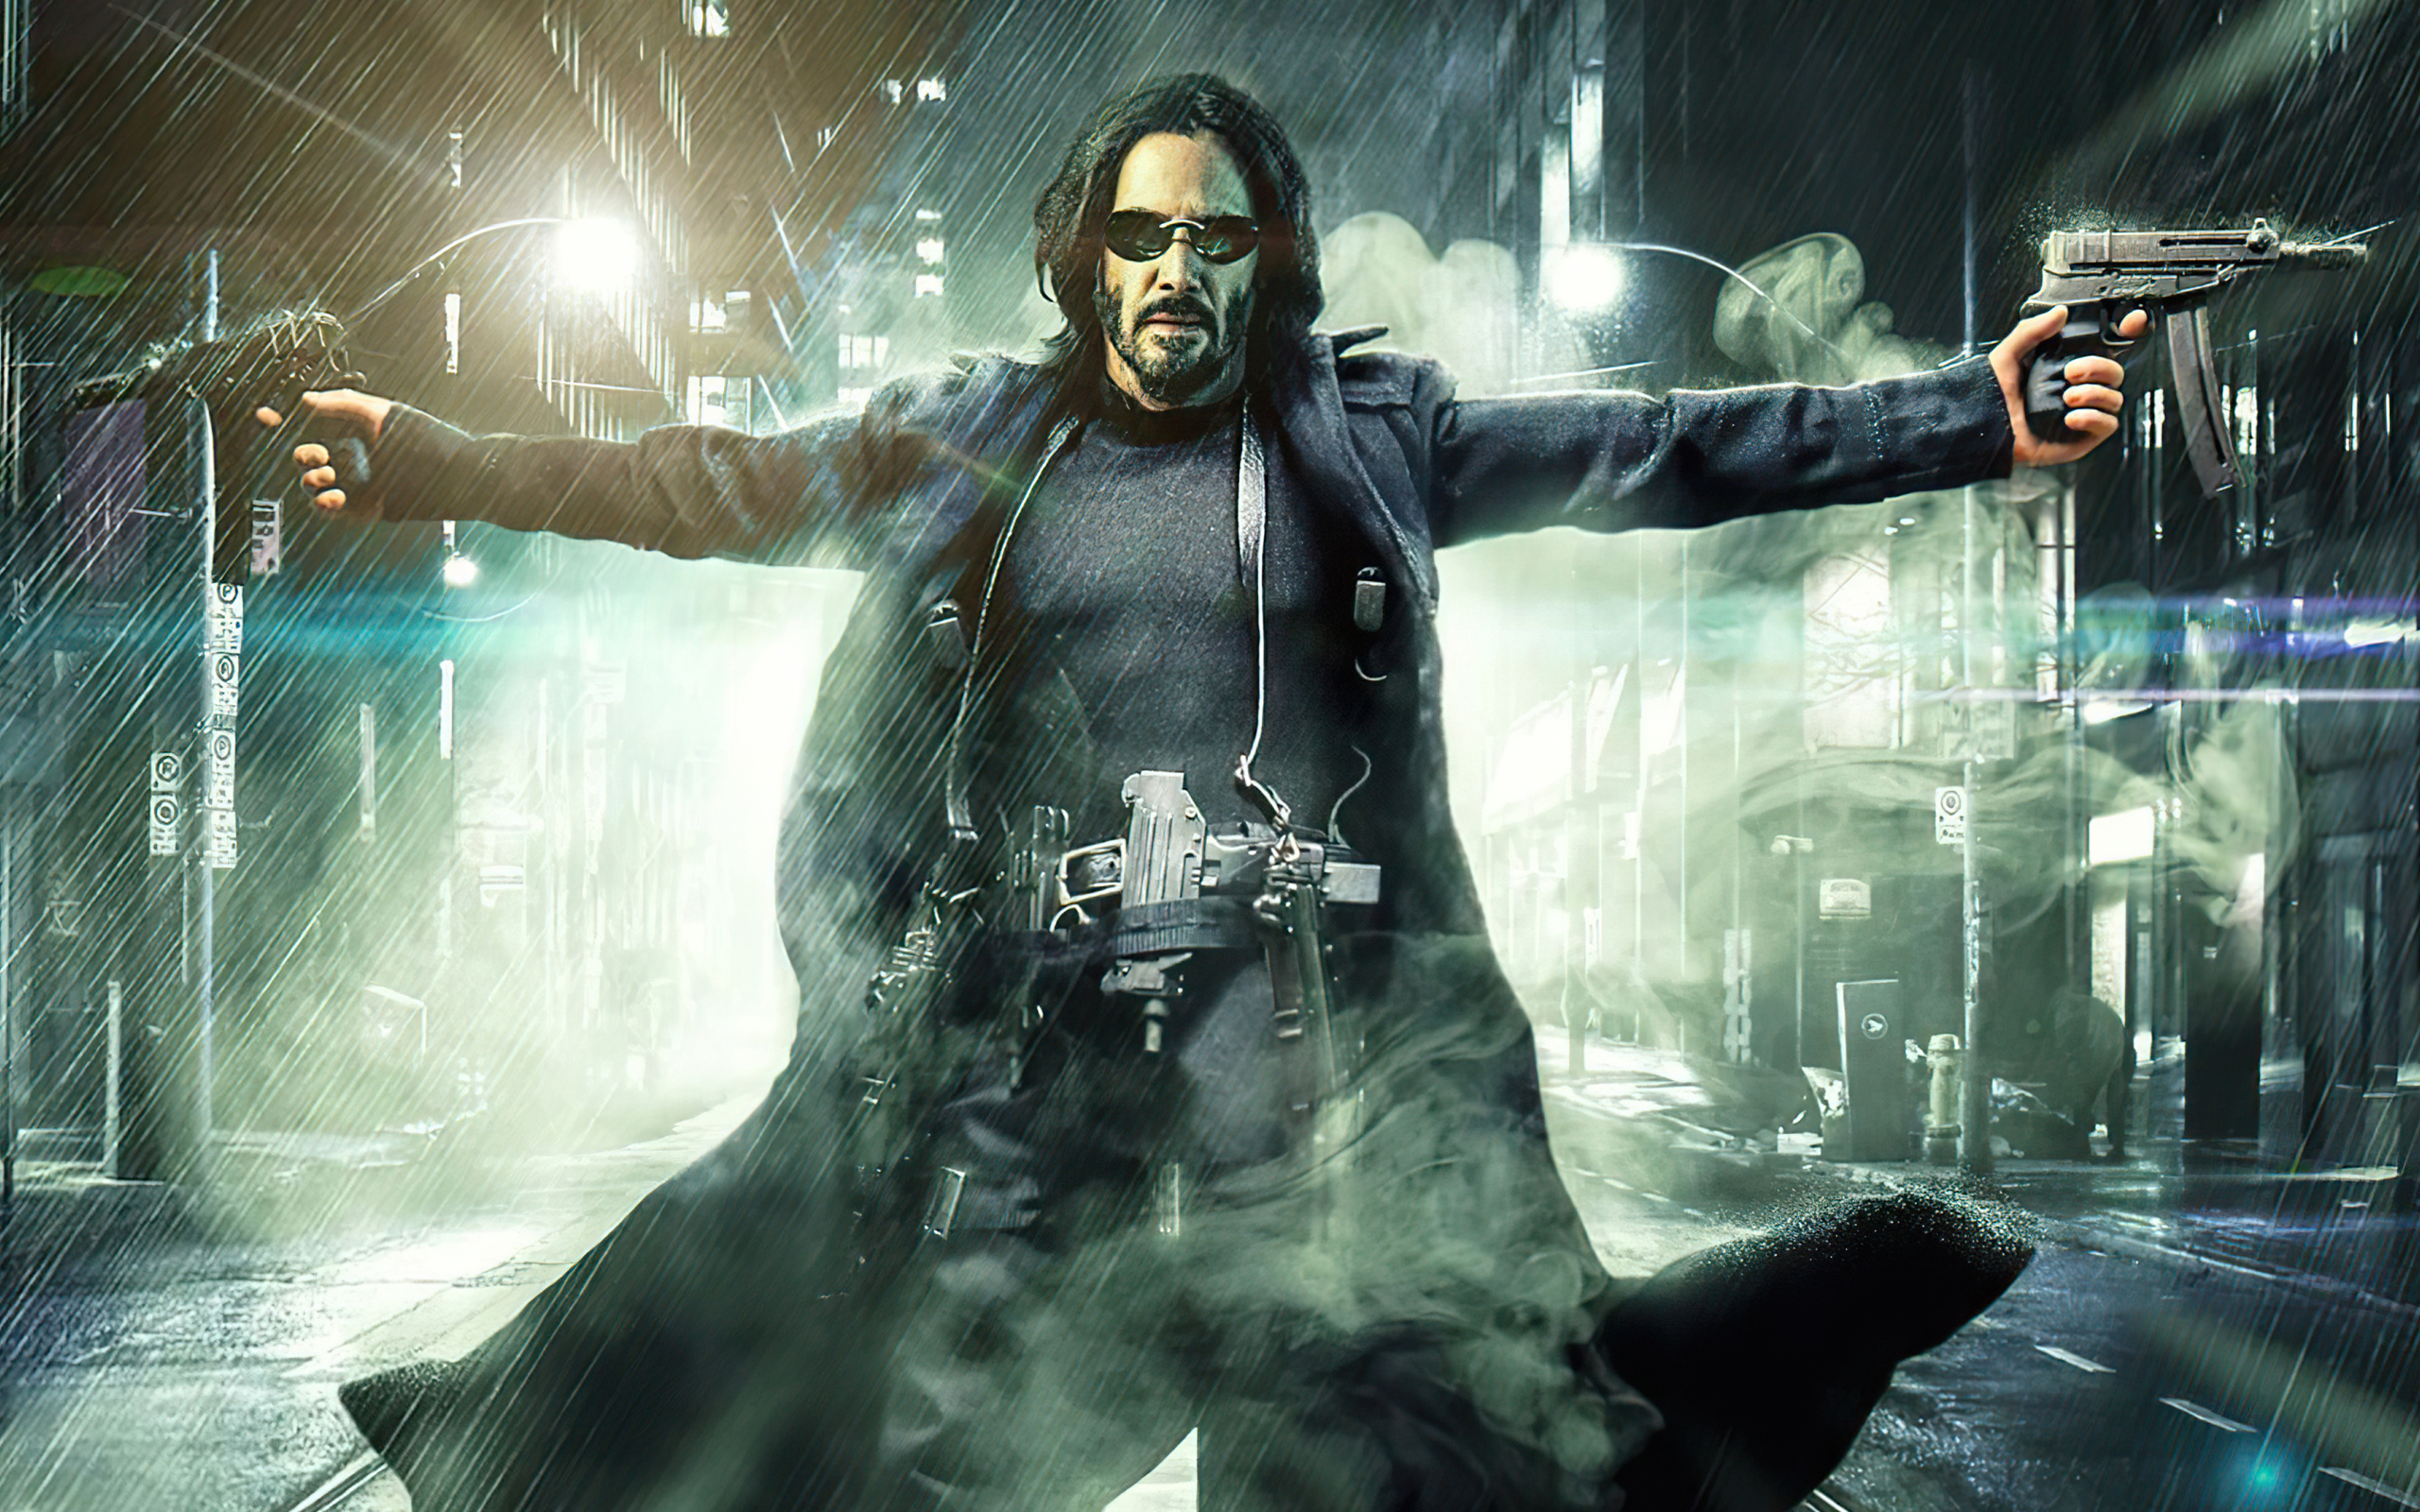 Neo wielding weapons in The Matrix Resurrection, 2021